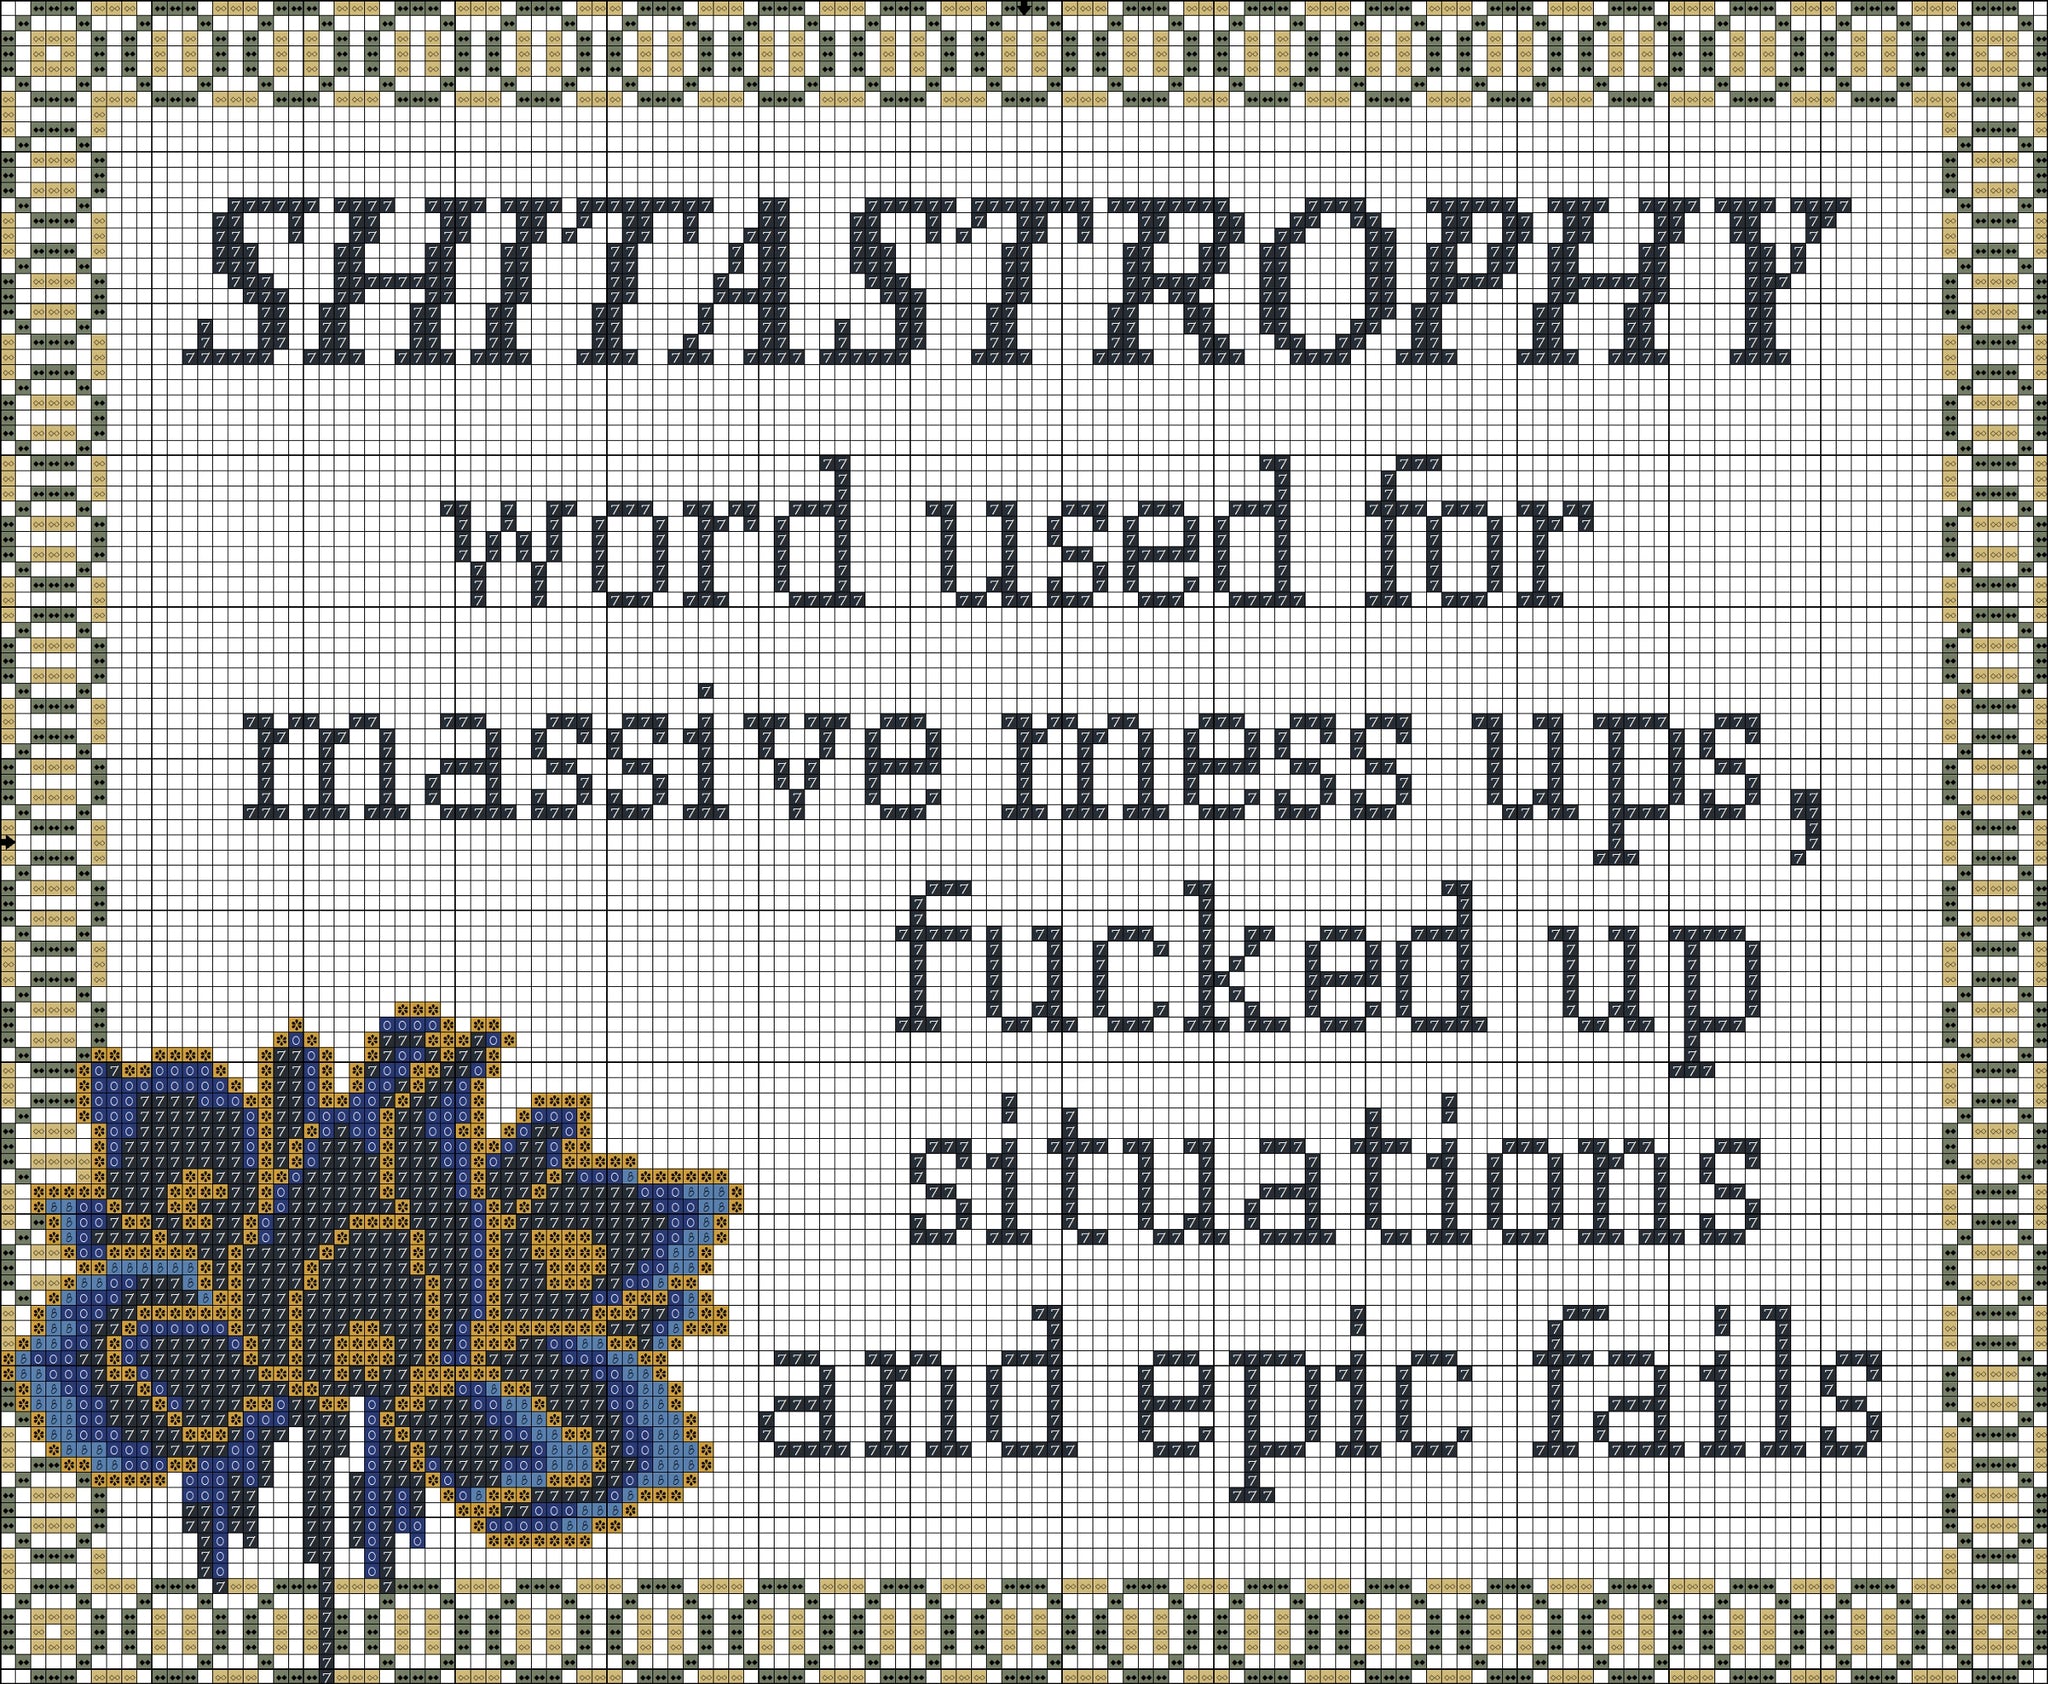 Shitastrophy funny subversive free cross stitch pattern - Tango Stitch